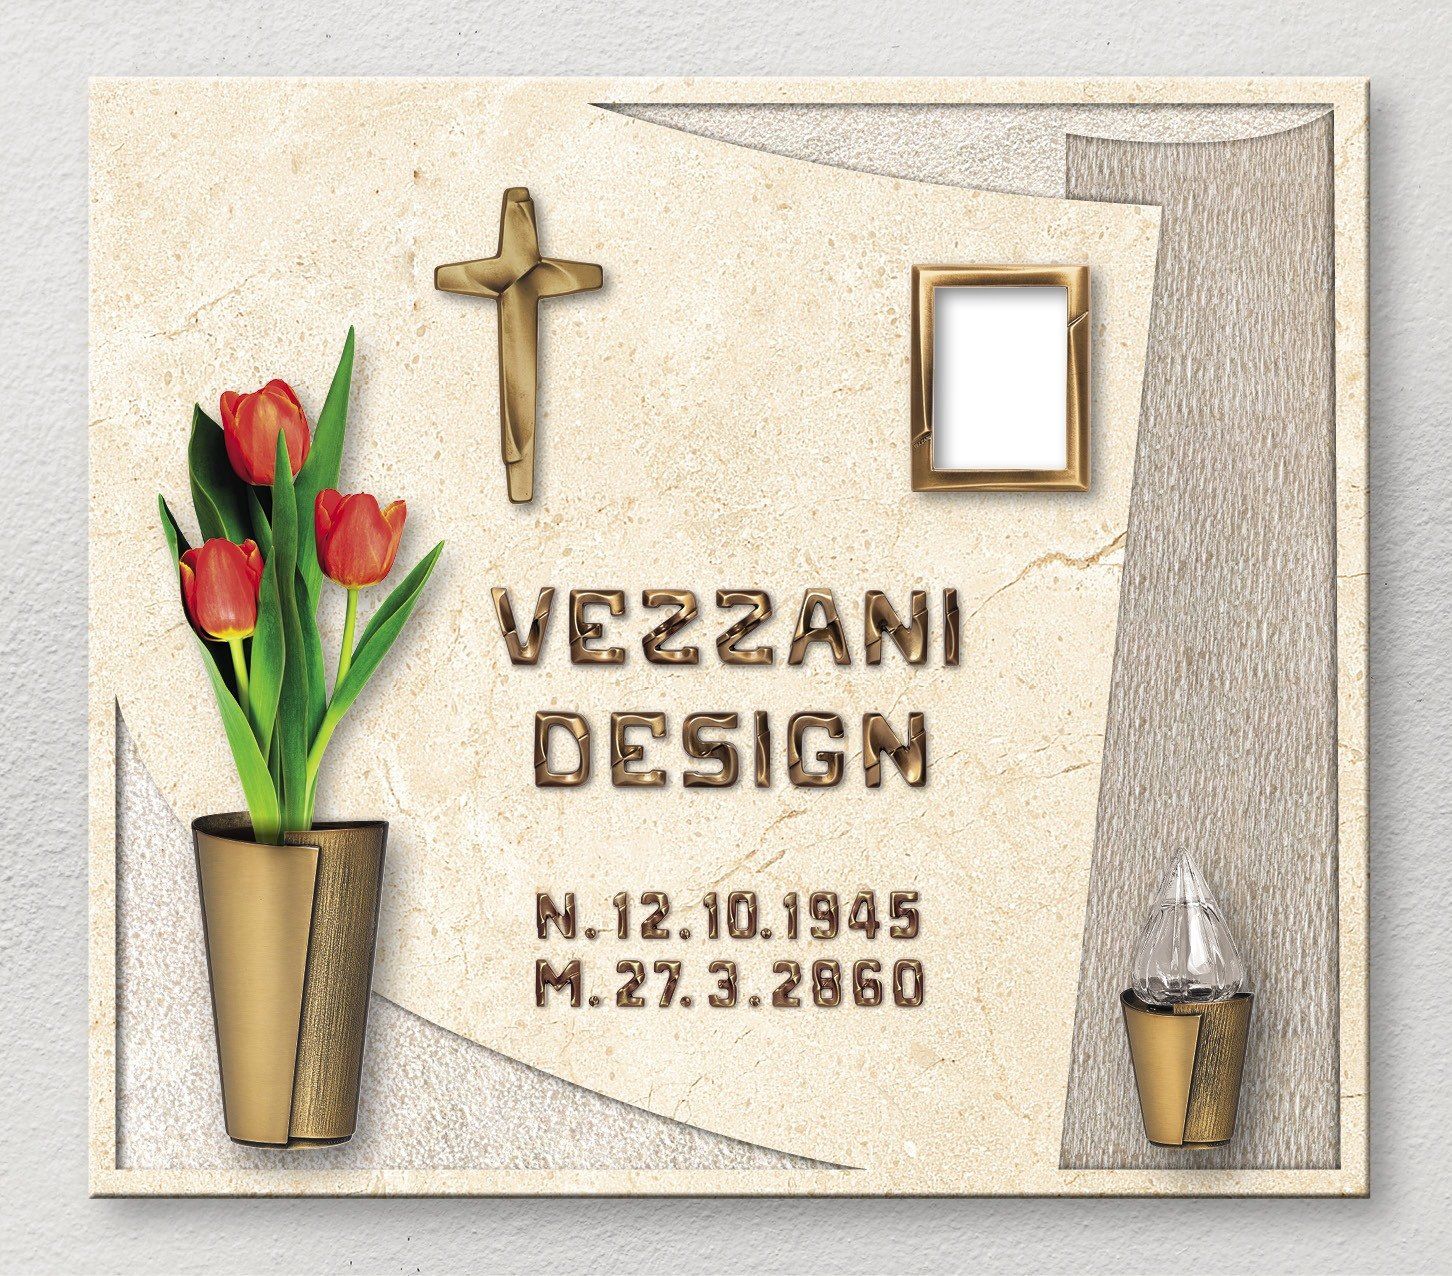 Niche with personalized engraving vezzani design 19